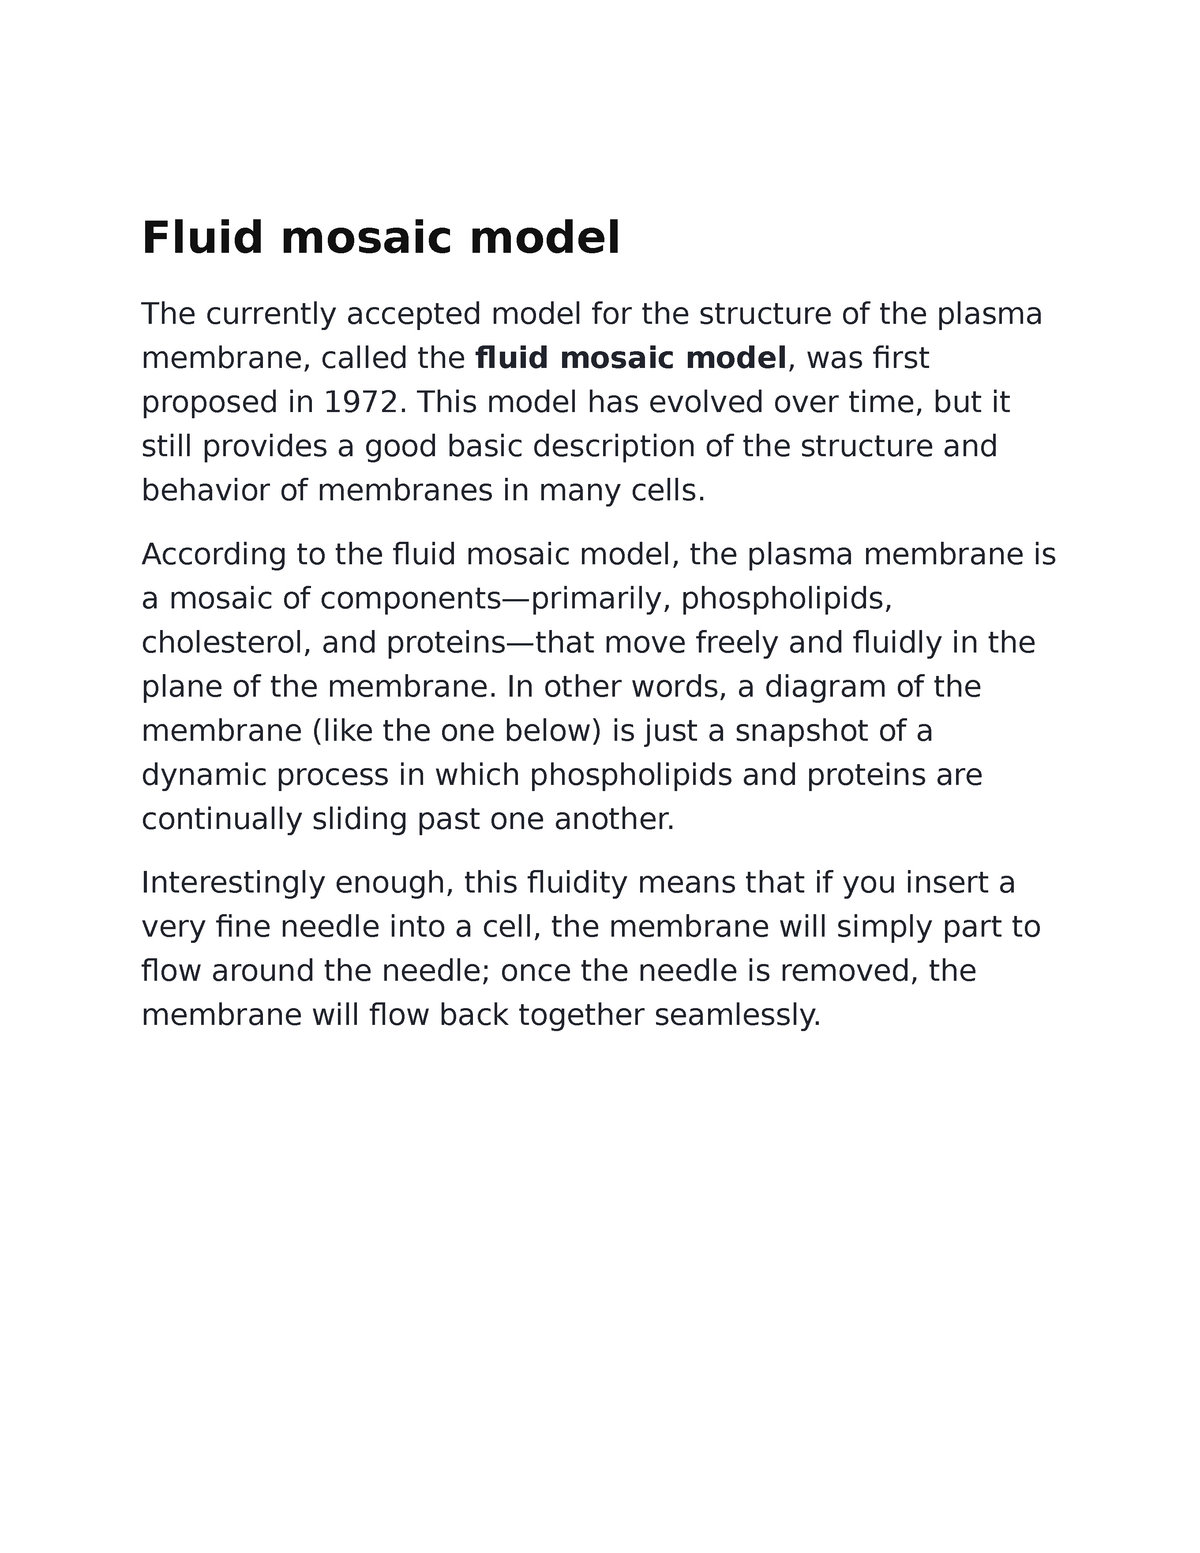 Diagram Fluid Mosaic Model Of Plasma Membrane - Arocreative